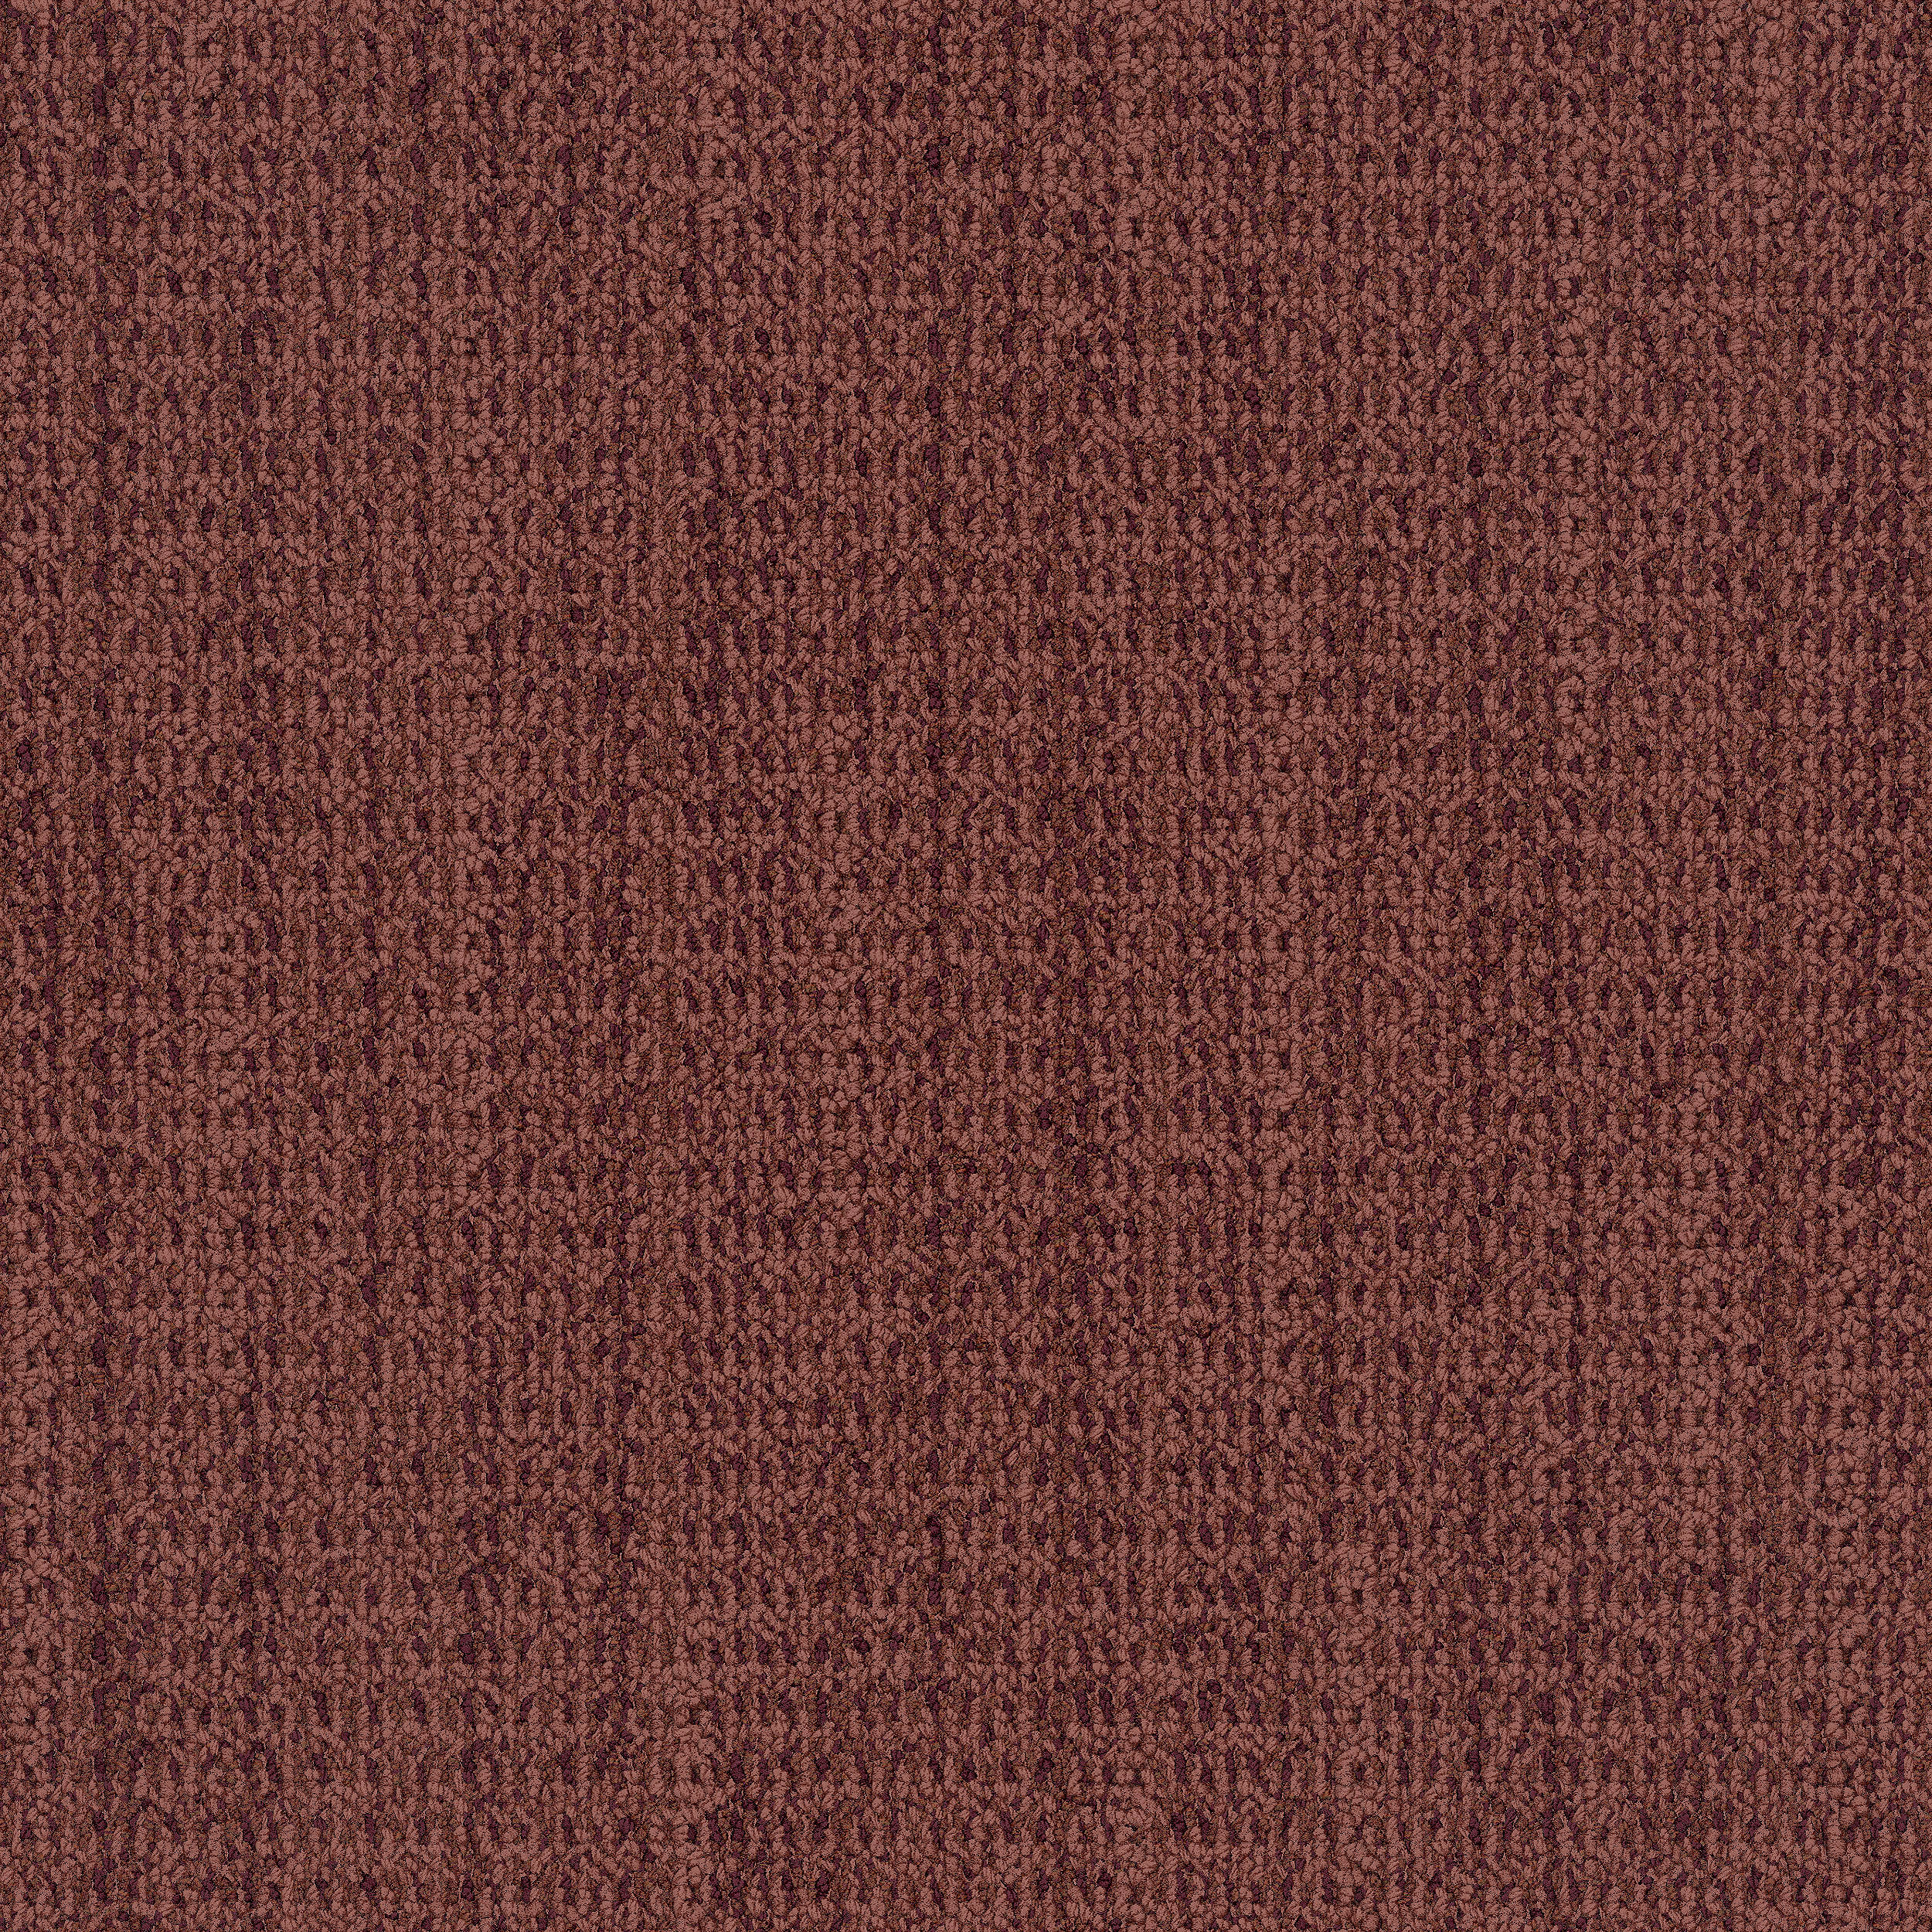 WG100 Carpet Tile in Wild Currant image number 12